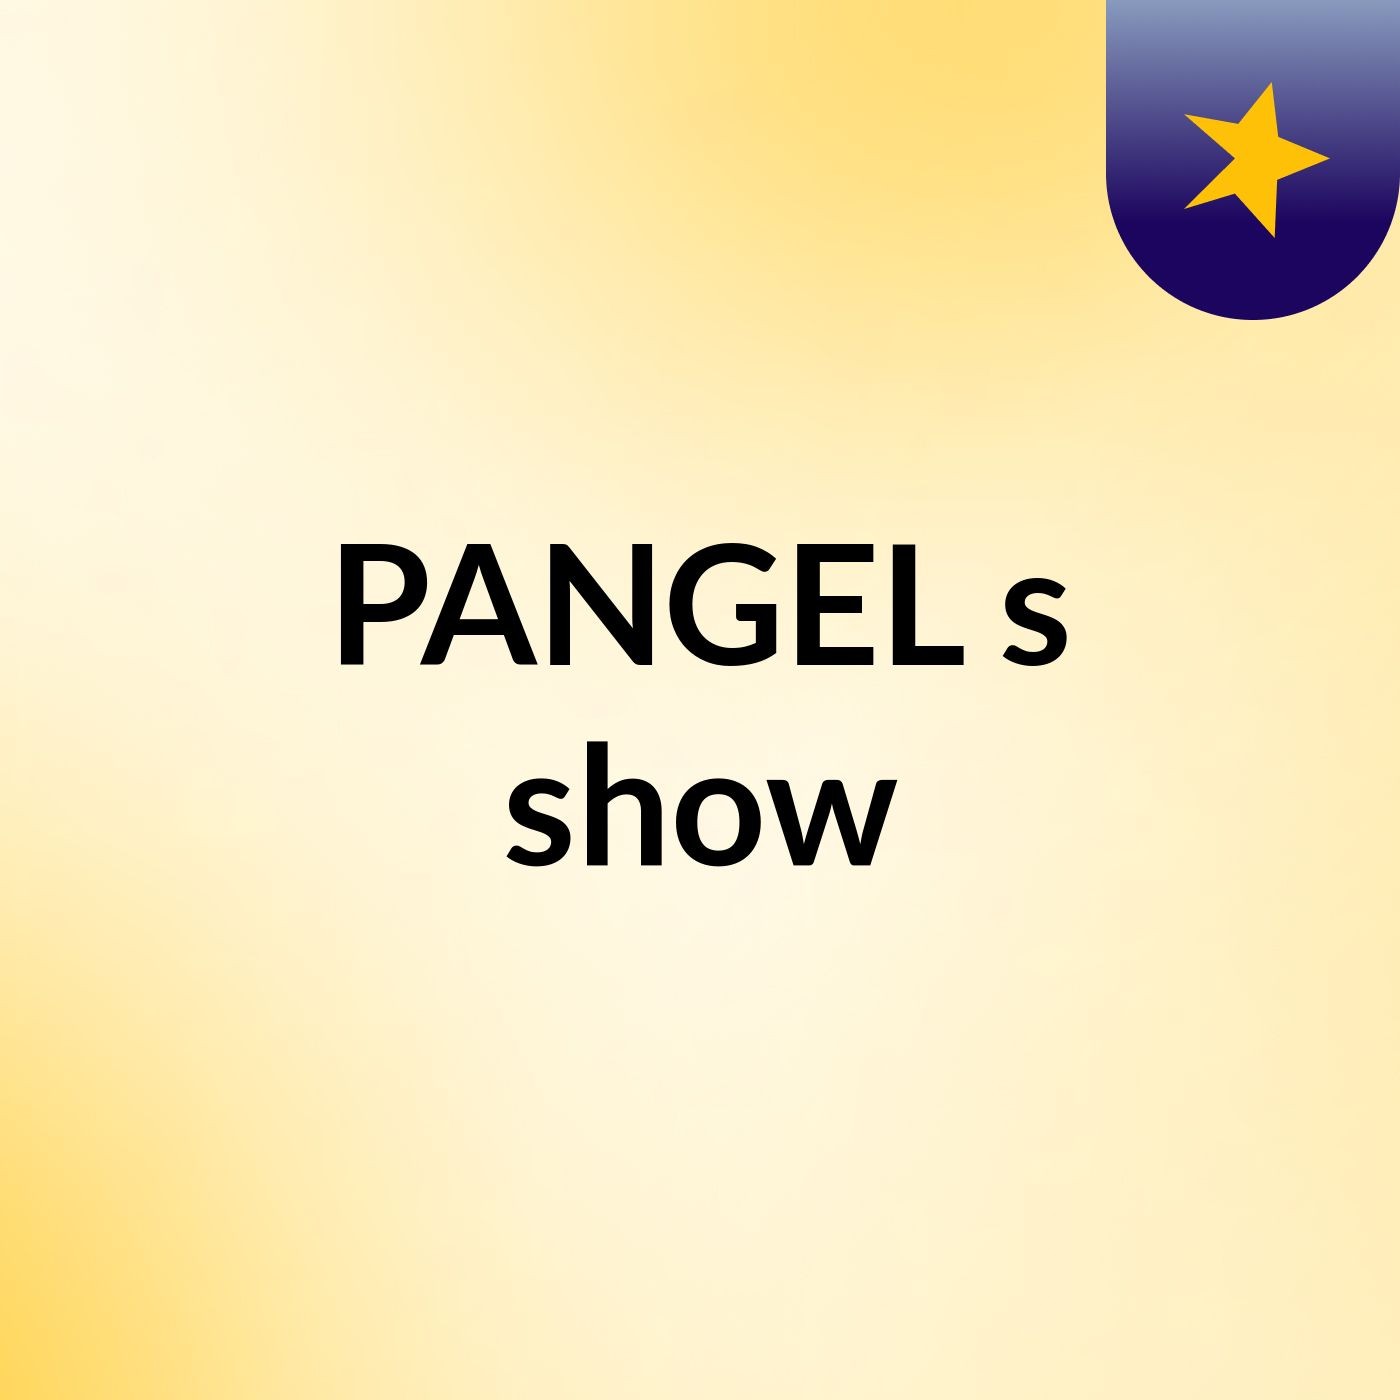 PANGEL's show